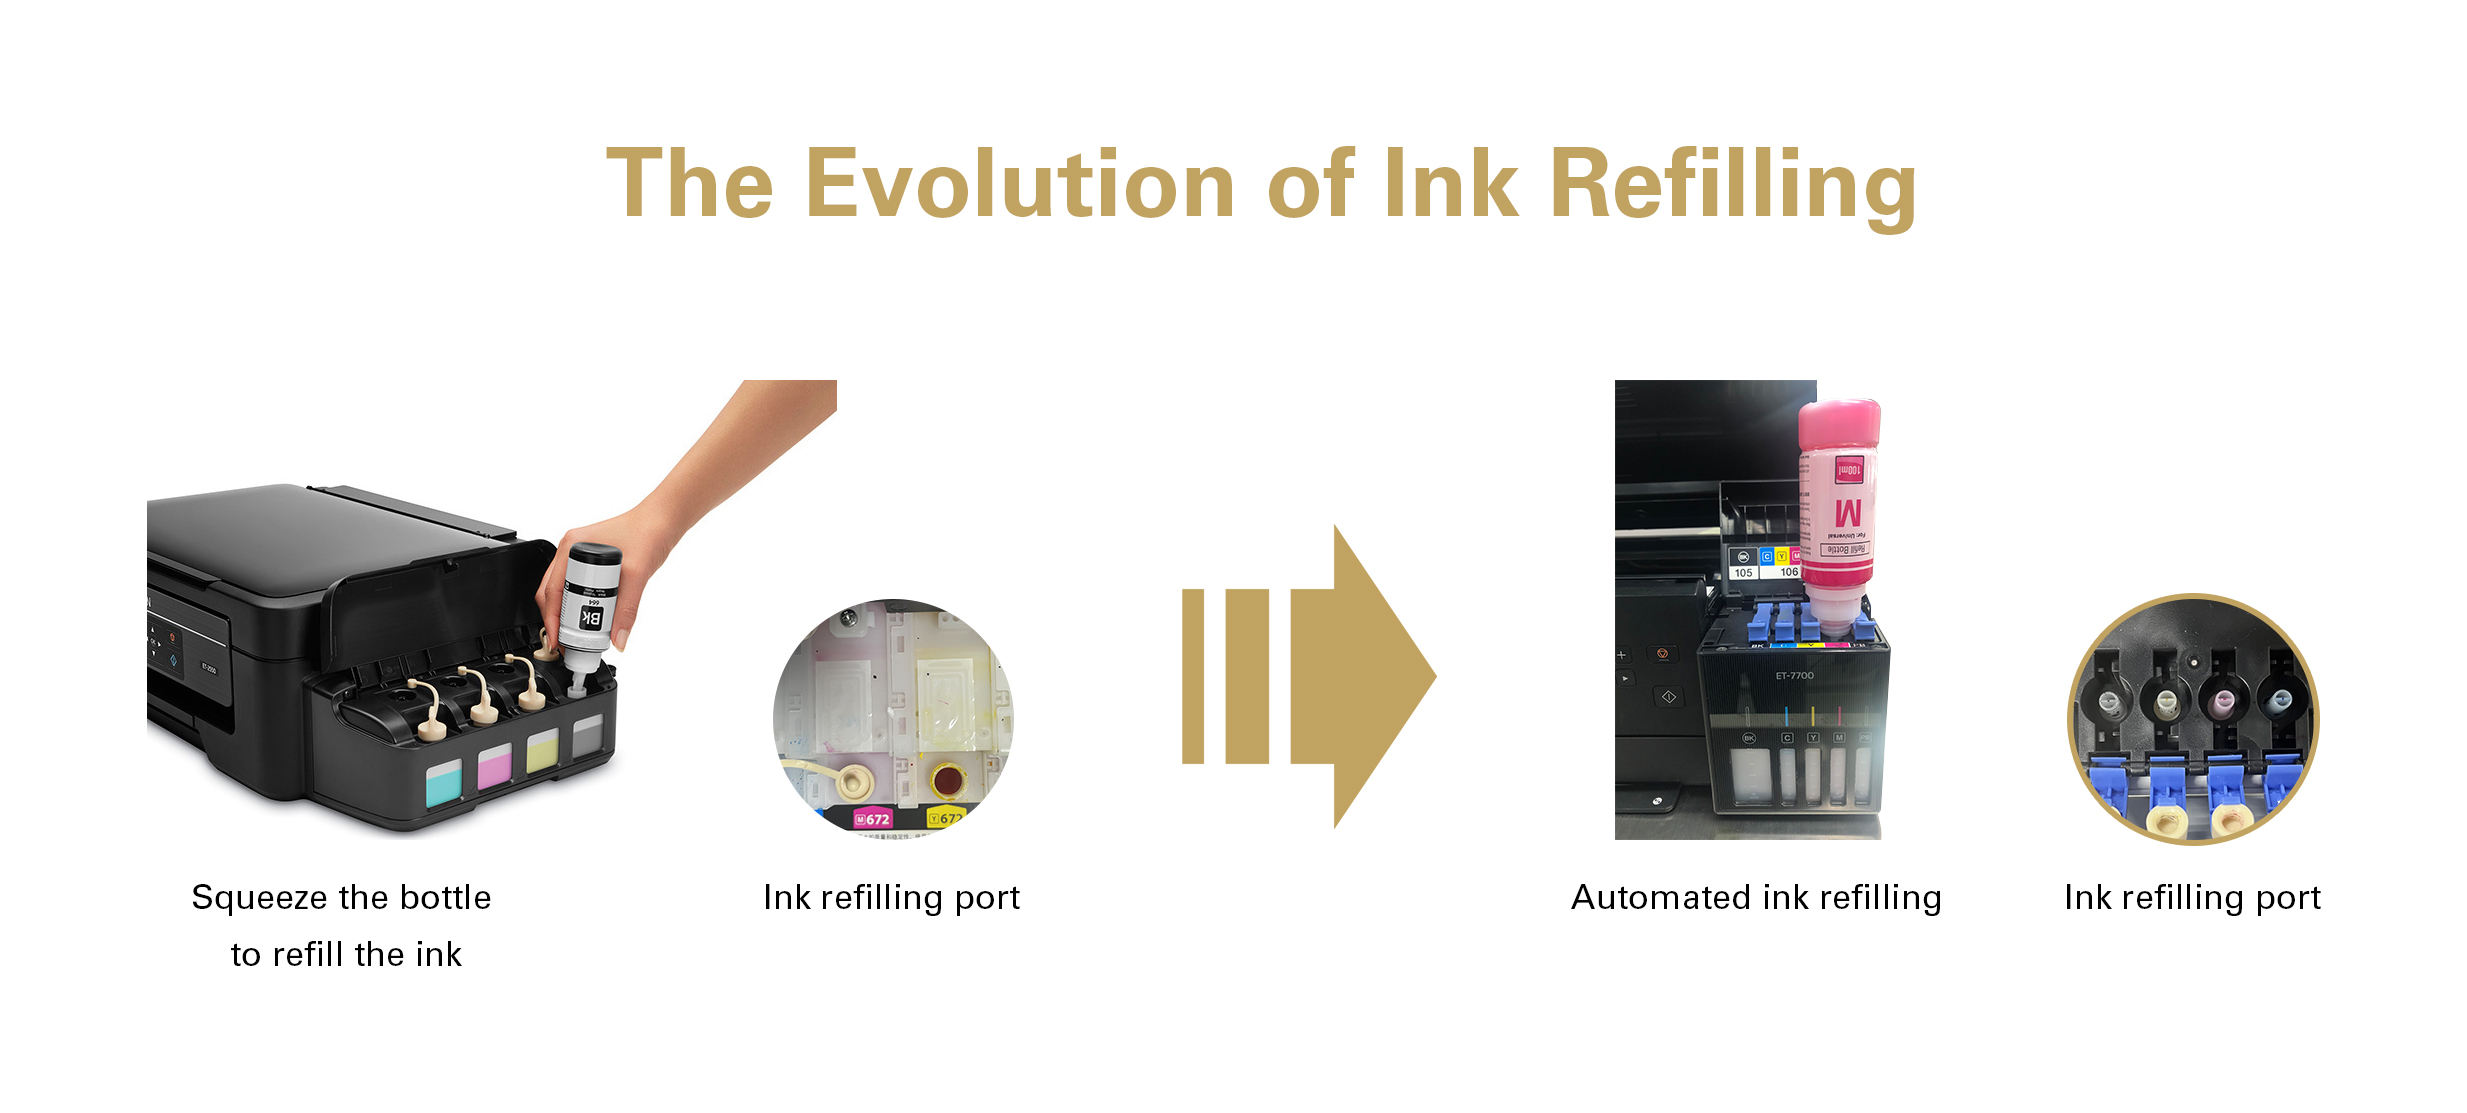 The Evolution of Ink Refilling